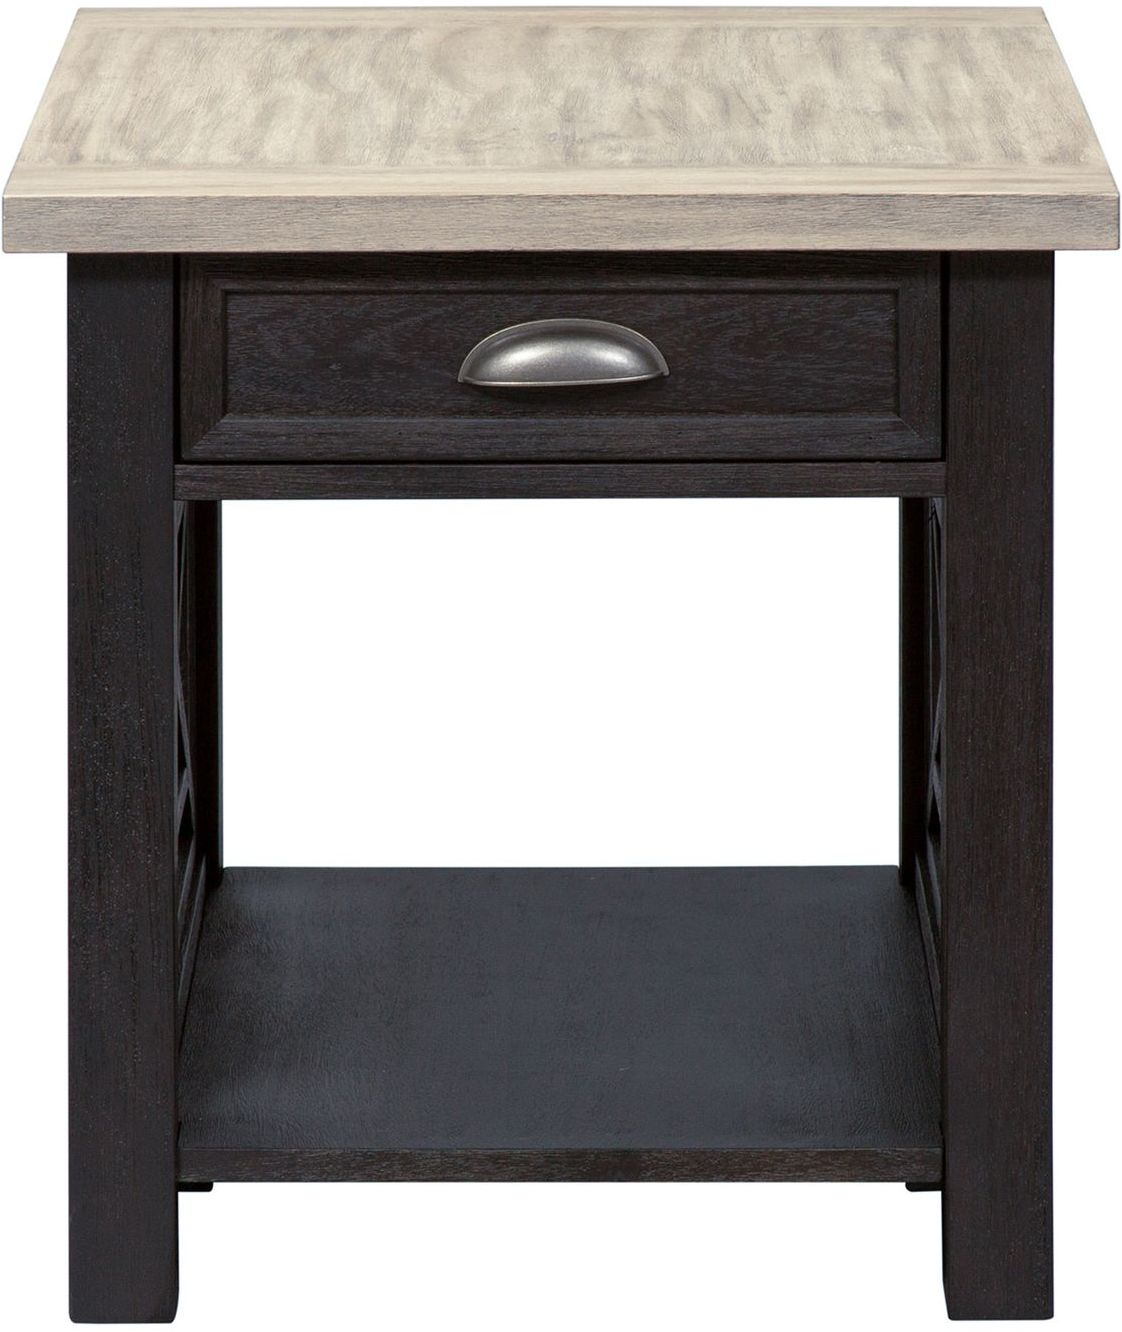 Liberty Furniture Heatherbrook Two-Tone End Table